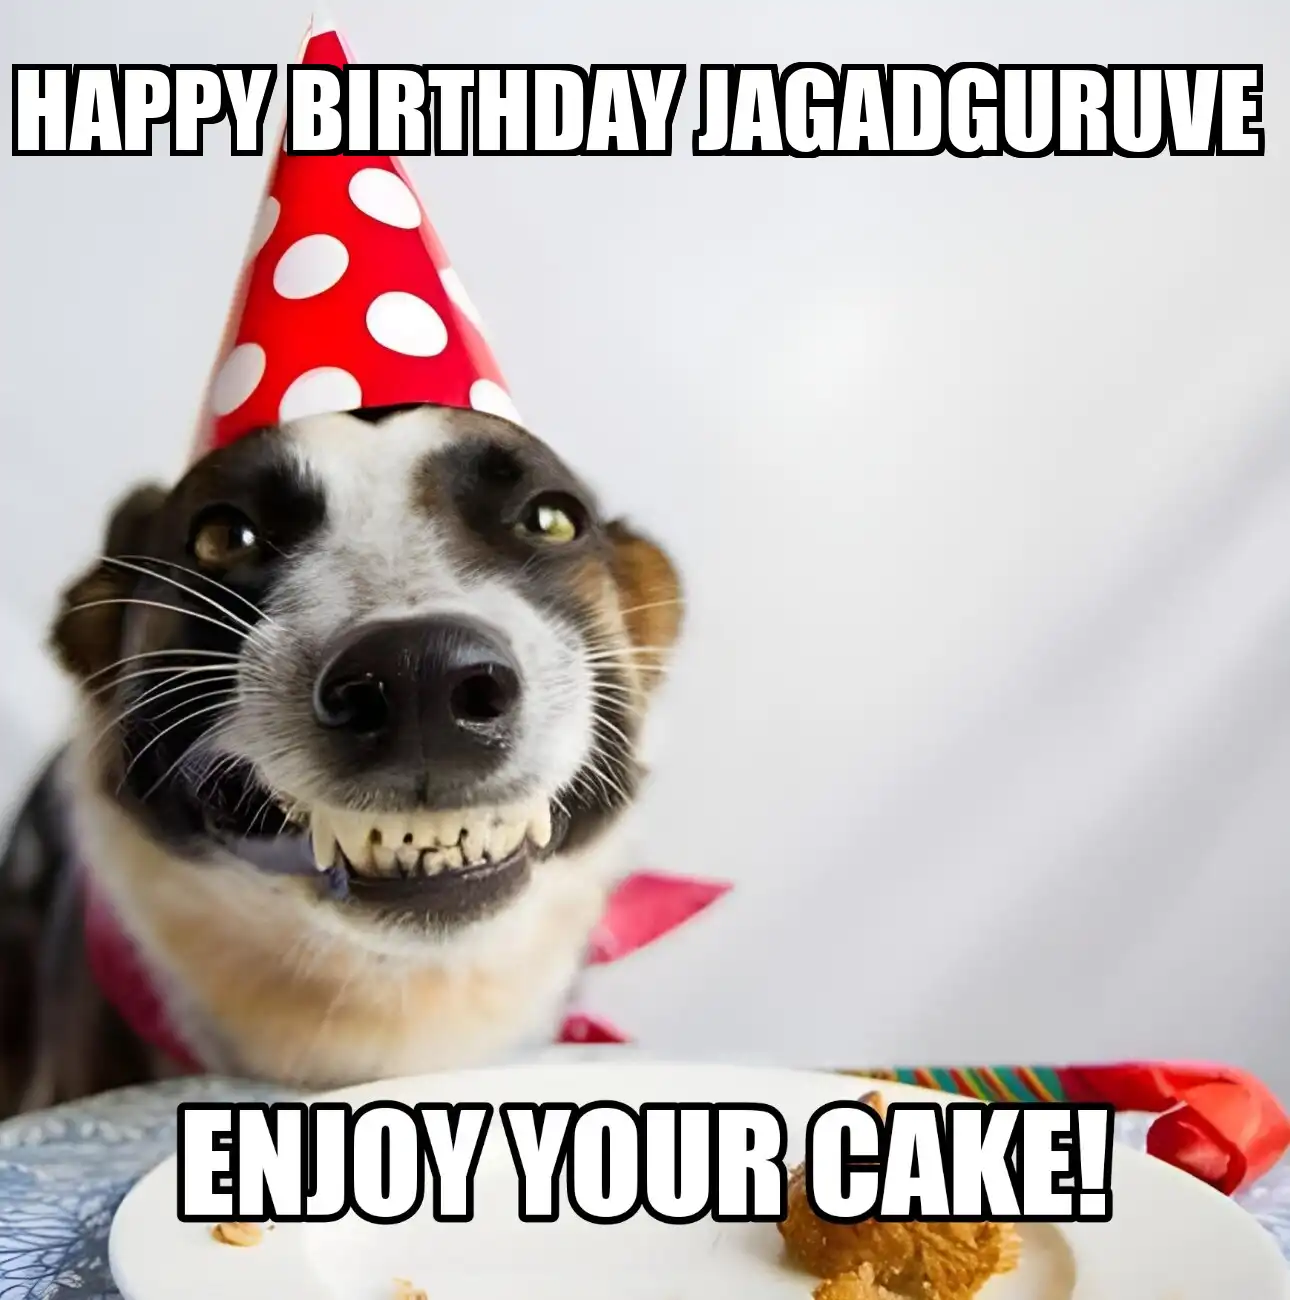 Happy Birthday Jagadguruve Enjoy Your Cake Dog Meme